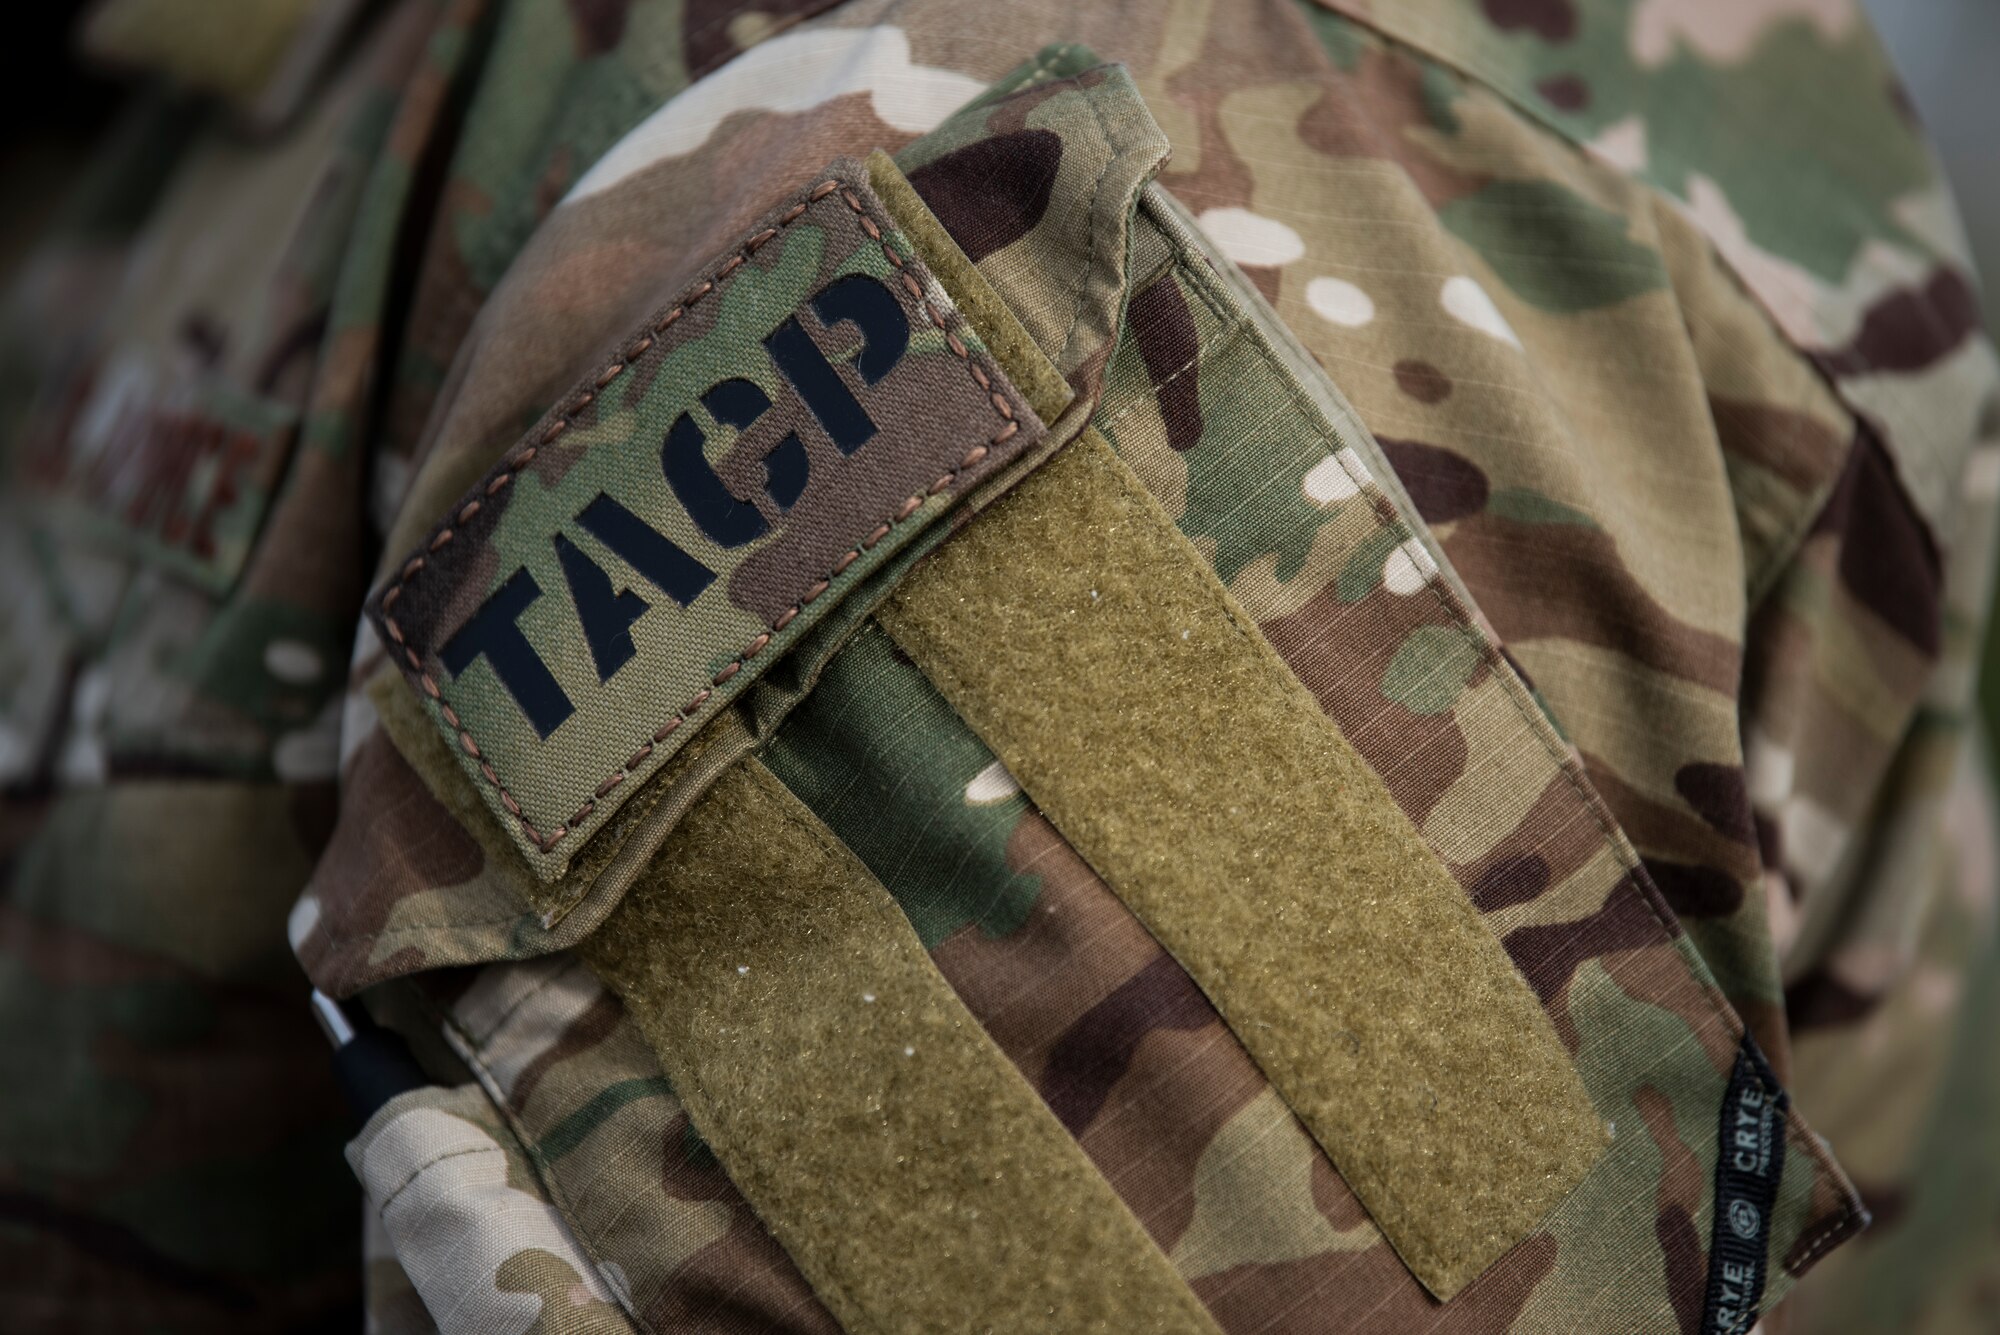 TACP patches sits upon uniform